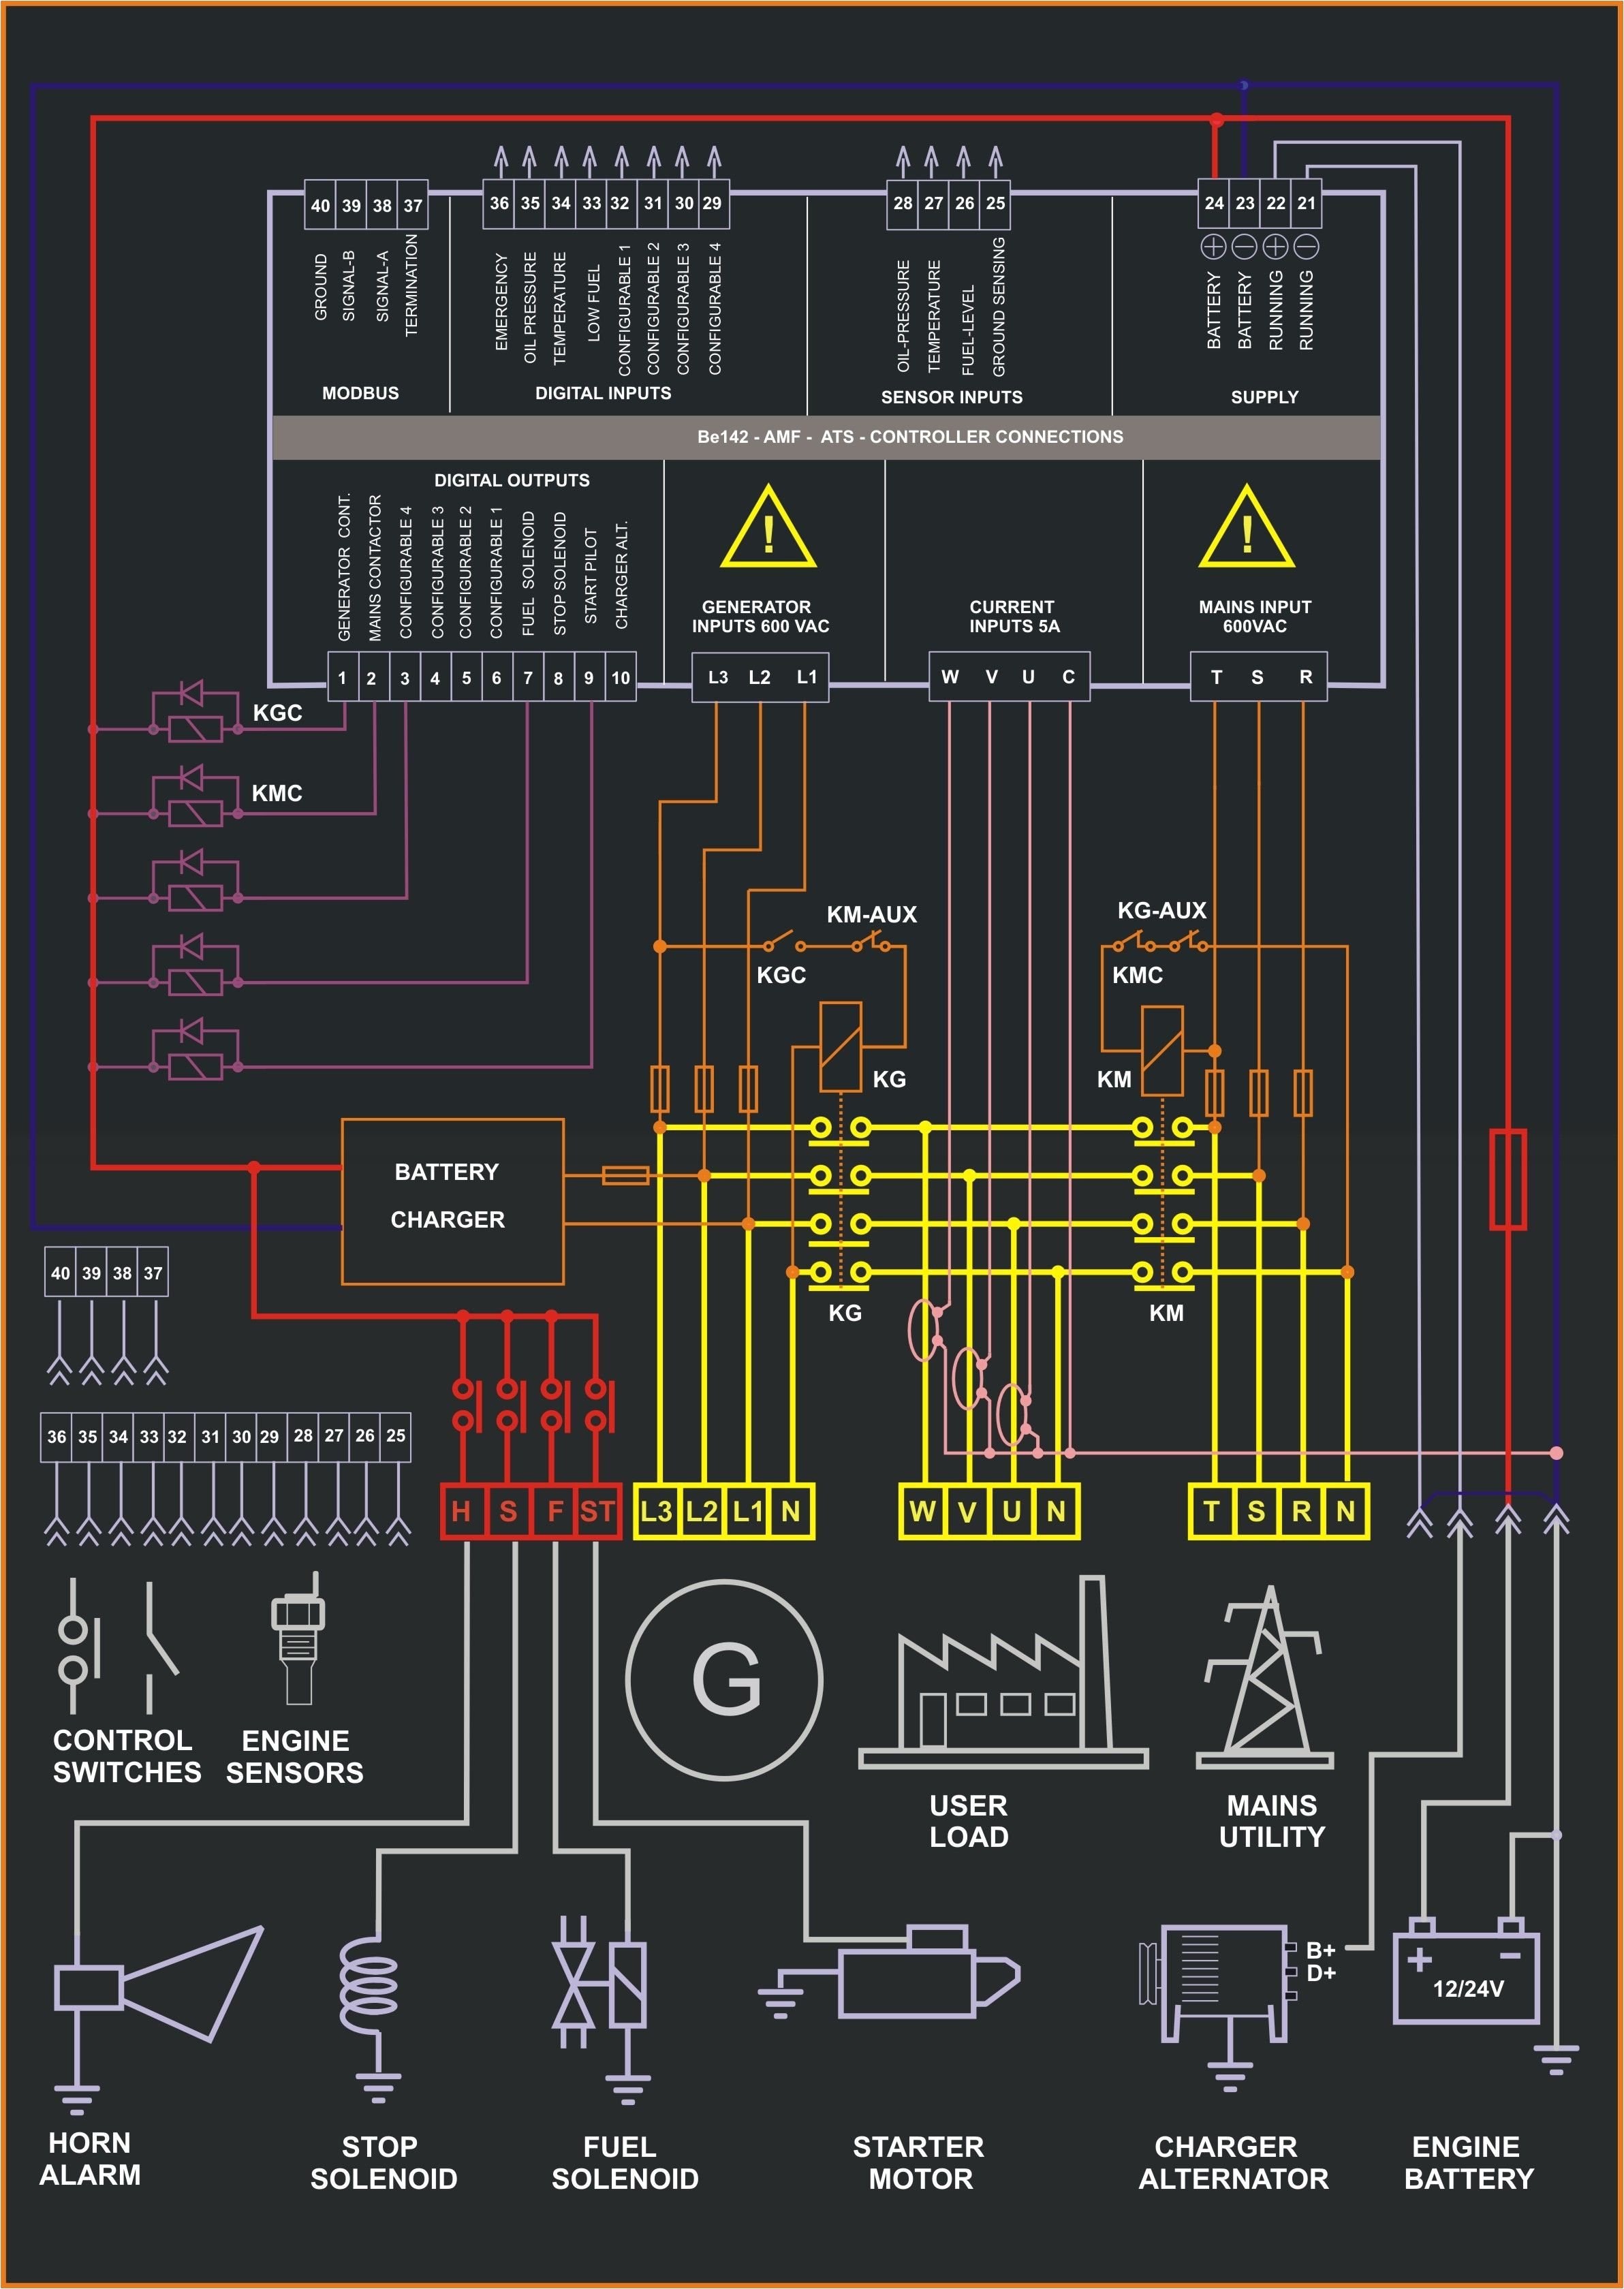 electrical panel board wiring diagram pdf fresh 41 awesome circuit control board circuit diagram electricalequipmentcircuit circuit